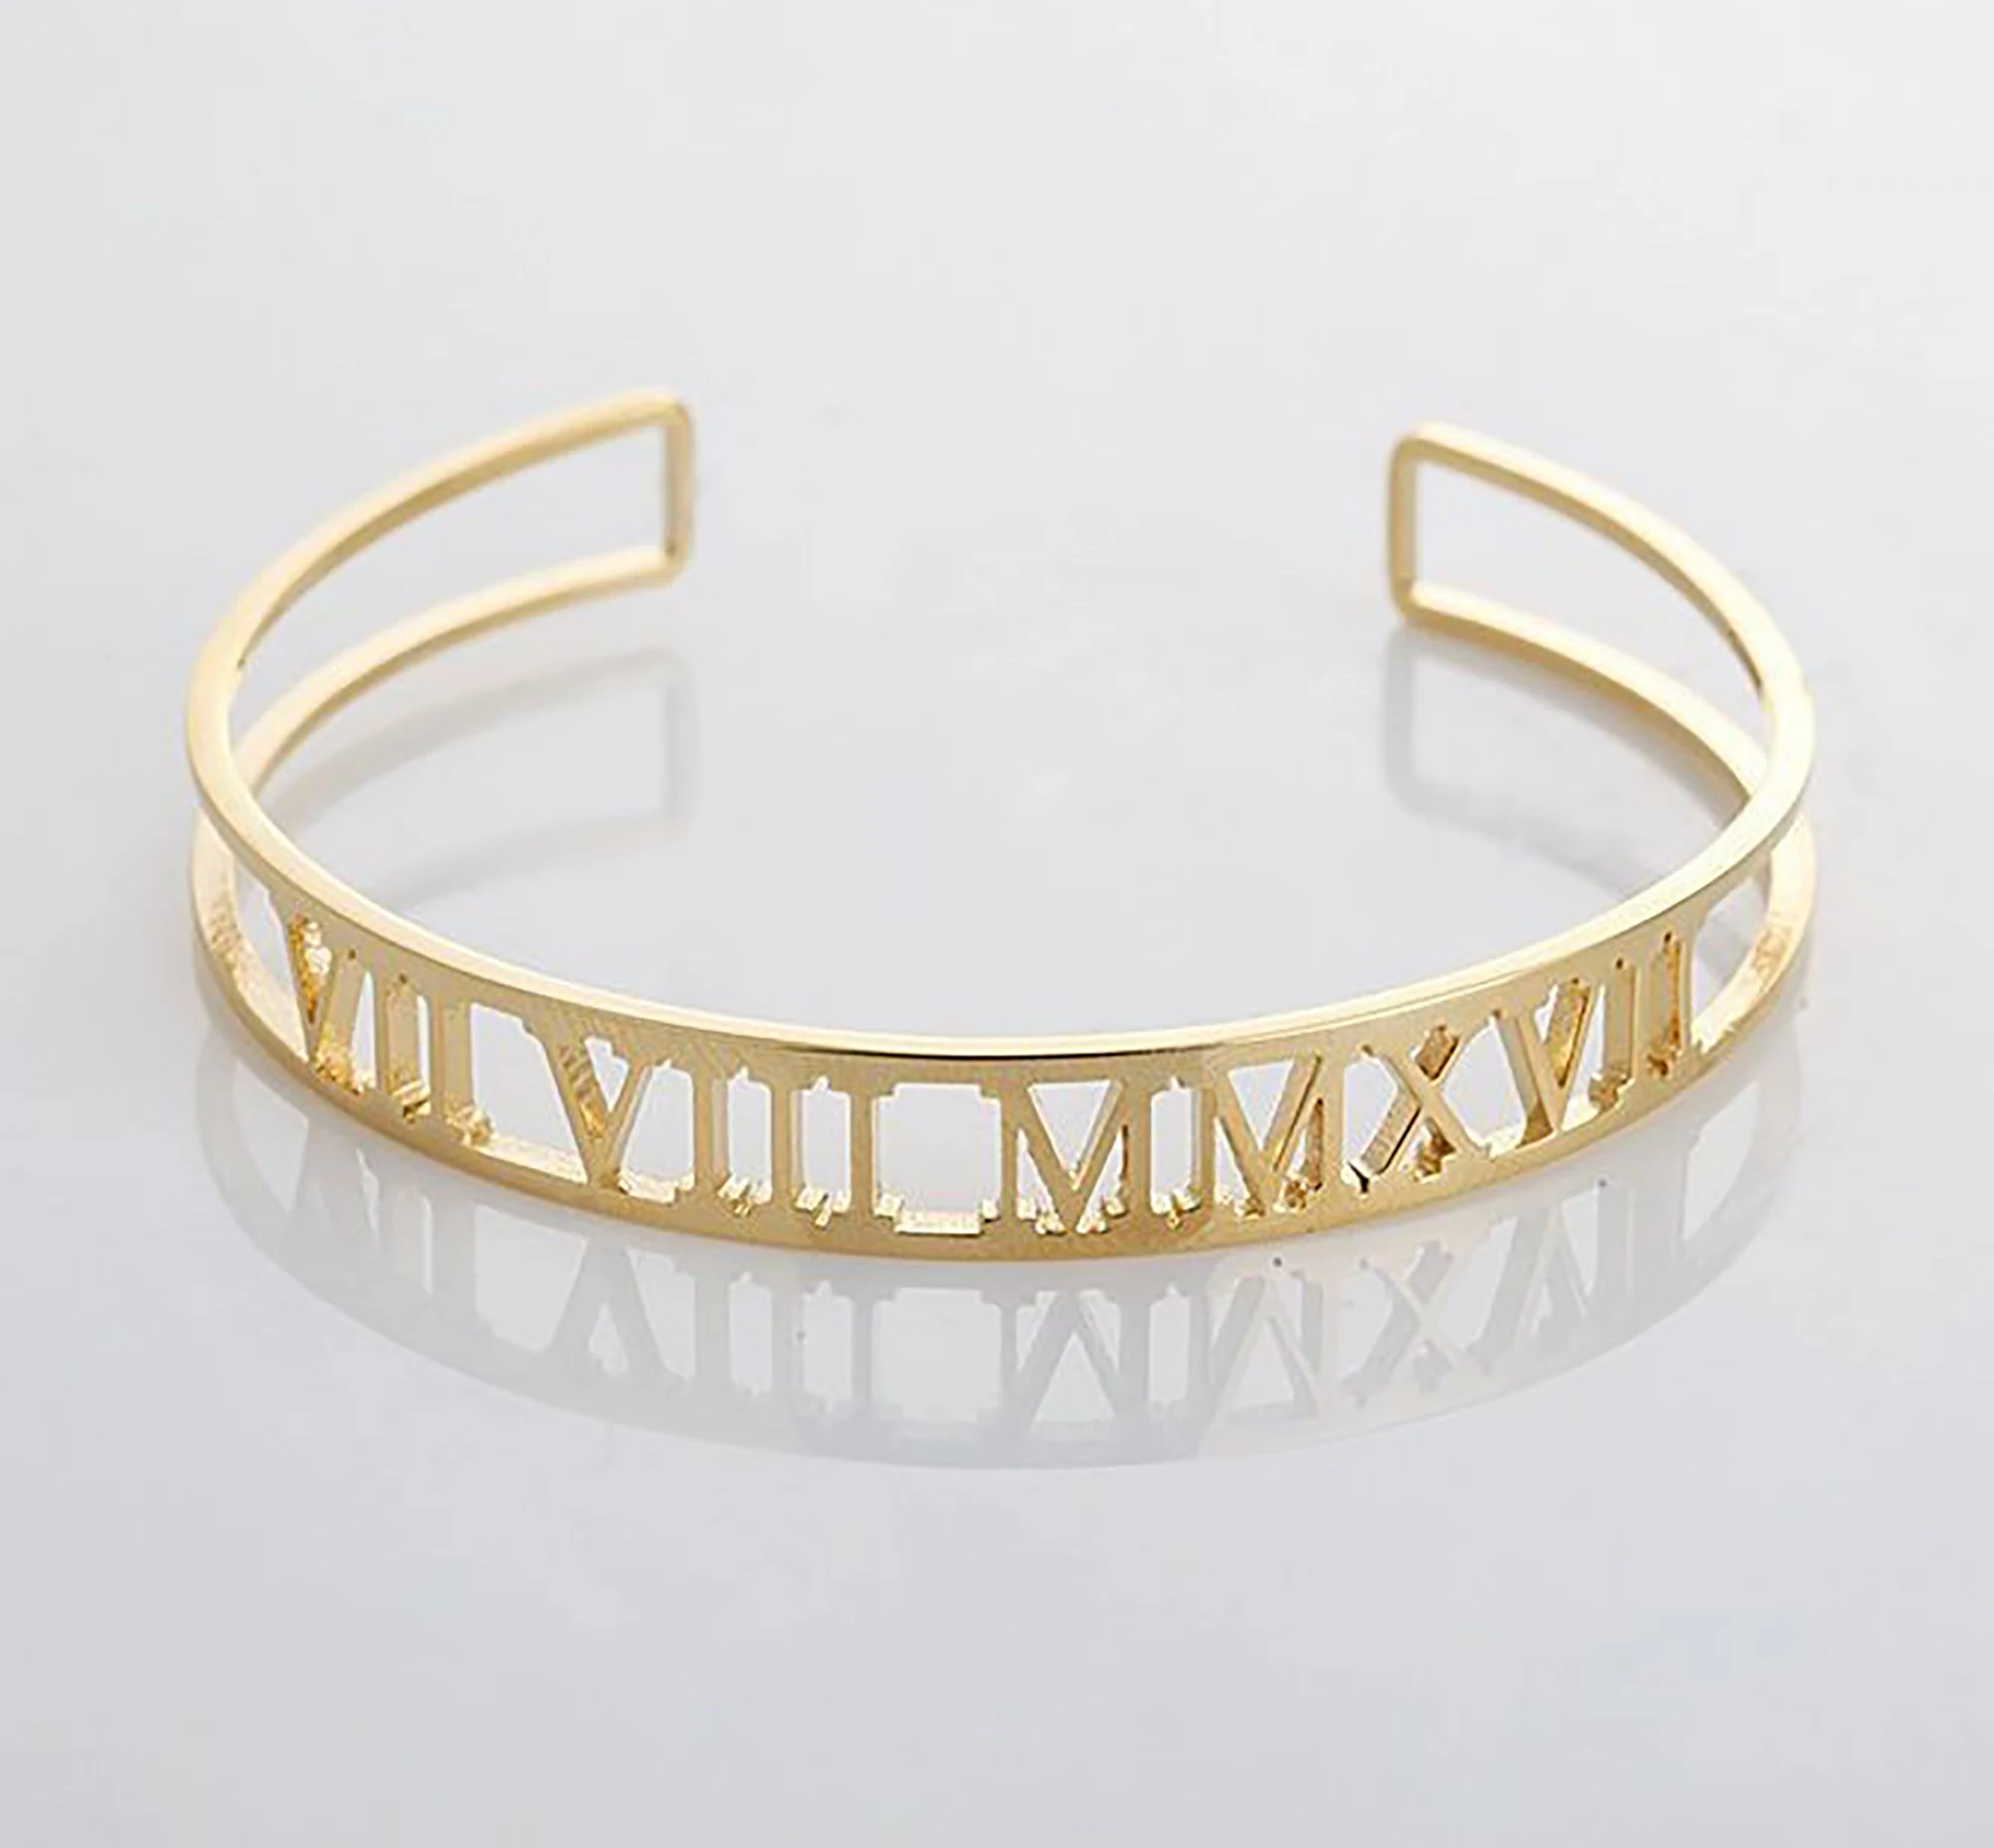 Source Custom Roman Numerals Jewelry Latitude Longitude Cuff Bangle Bracelet  For Lover,Couples Jewelry on m.